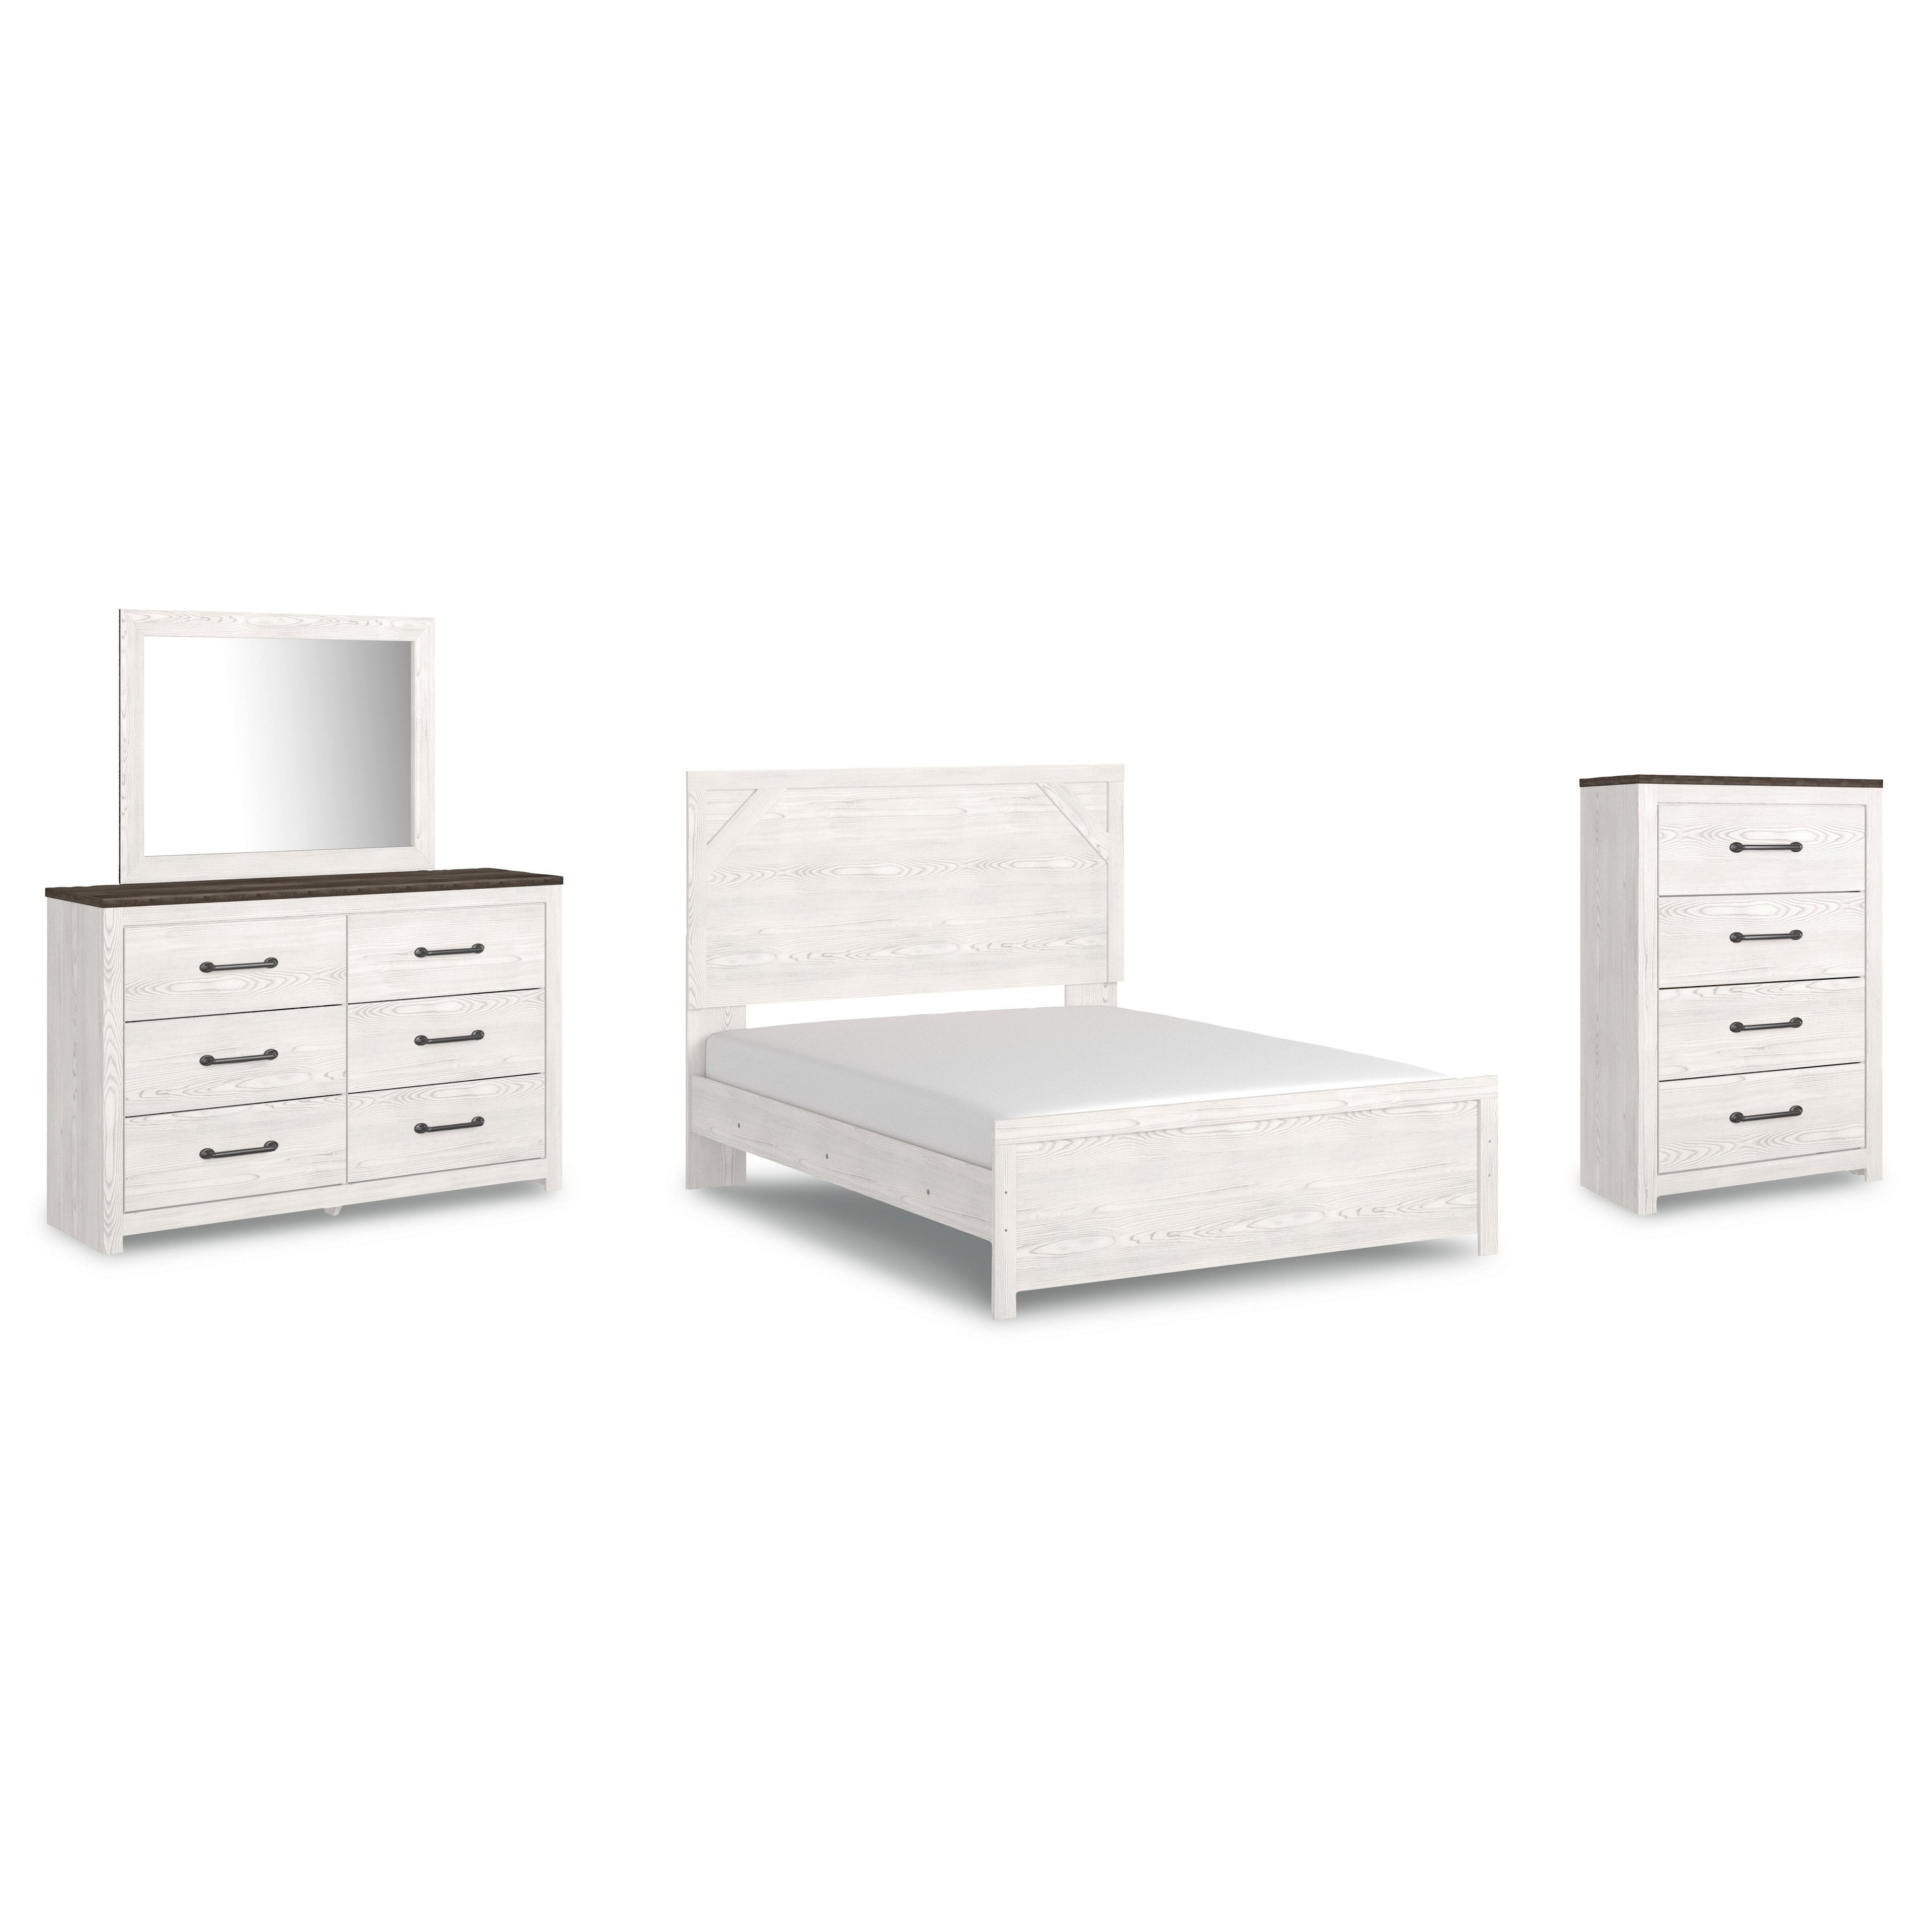 Gerridan Queen Panel Bed, Dresser, Mirror, and Chest Ash-B1190B18